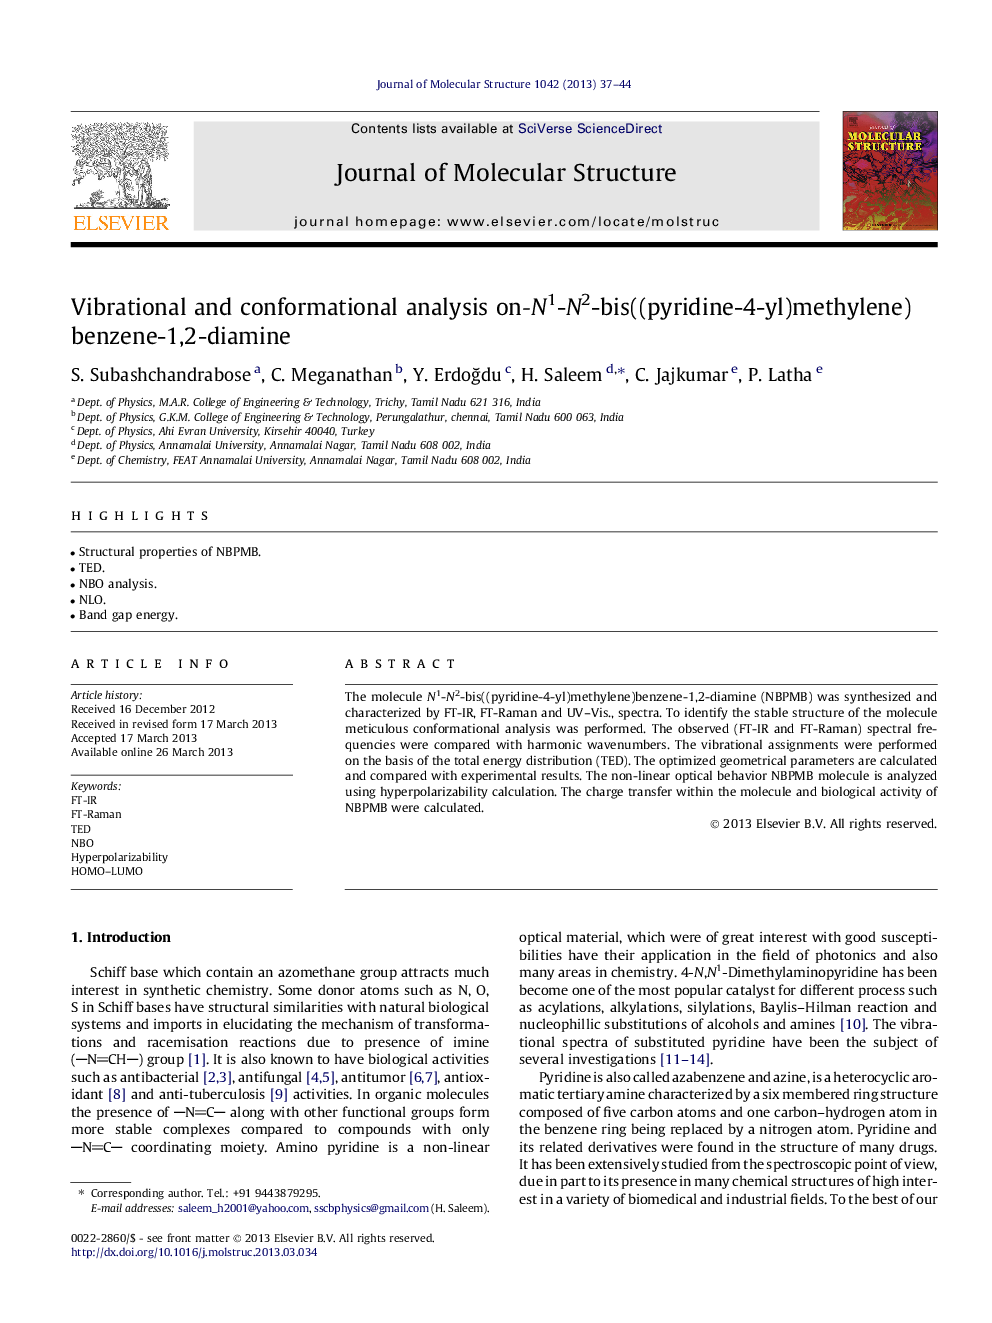 Vibrational and conformational analysis on-N1-N2-bis((pyridine-4-yl)methylene) benzene-1,2-diamine